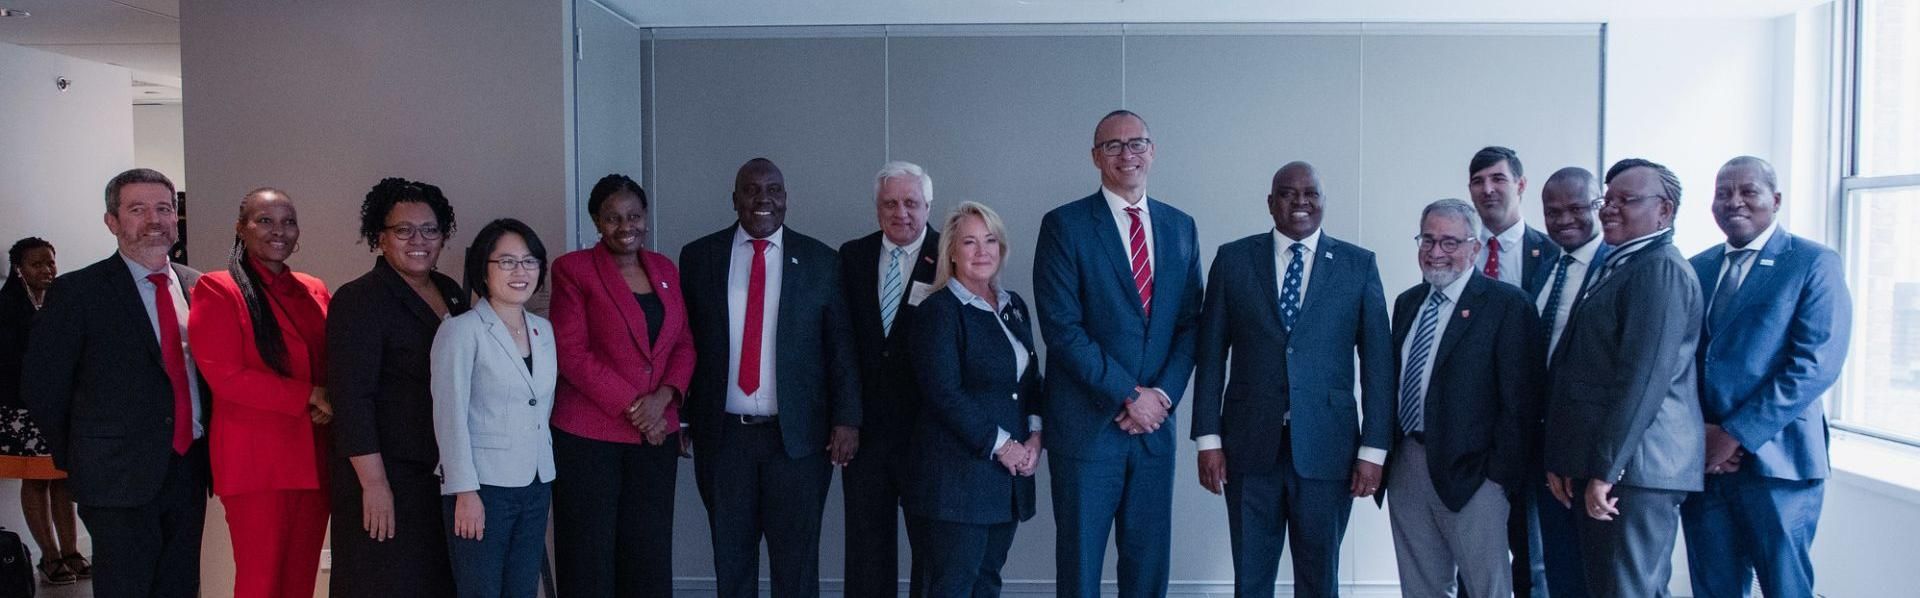 Rutgers and Botswana Partnership Meeting in NYC